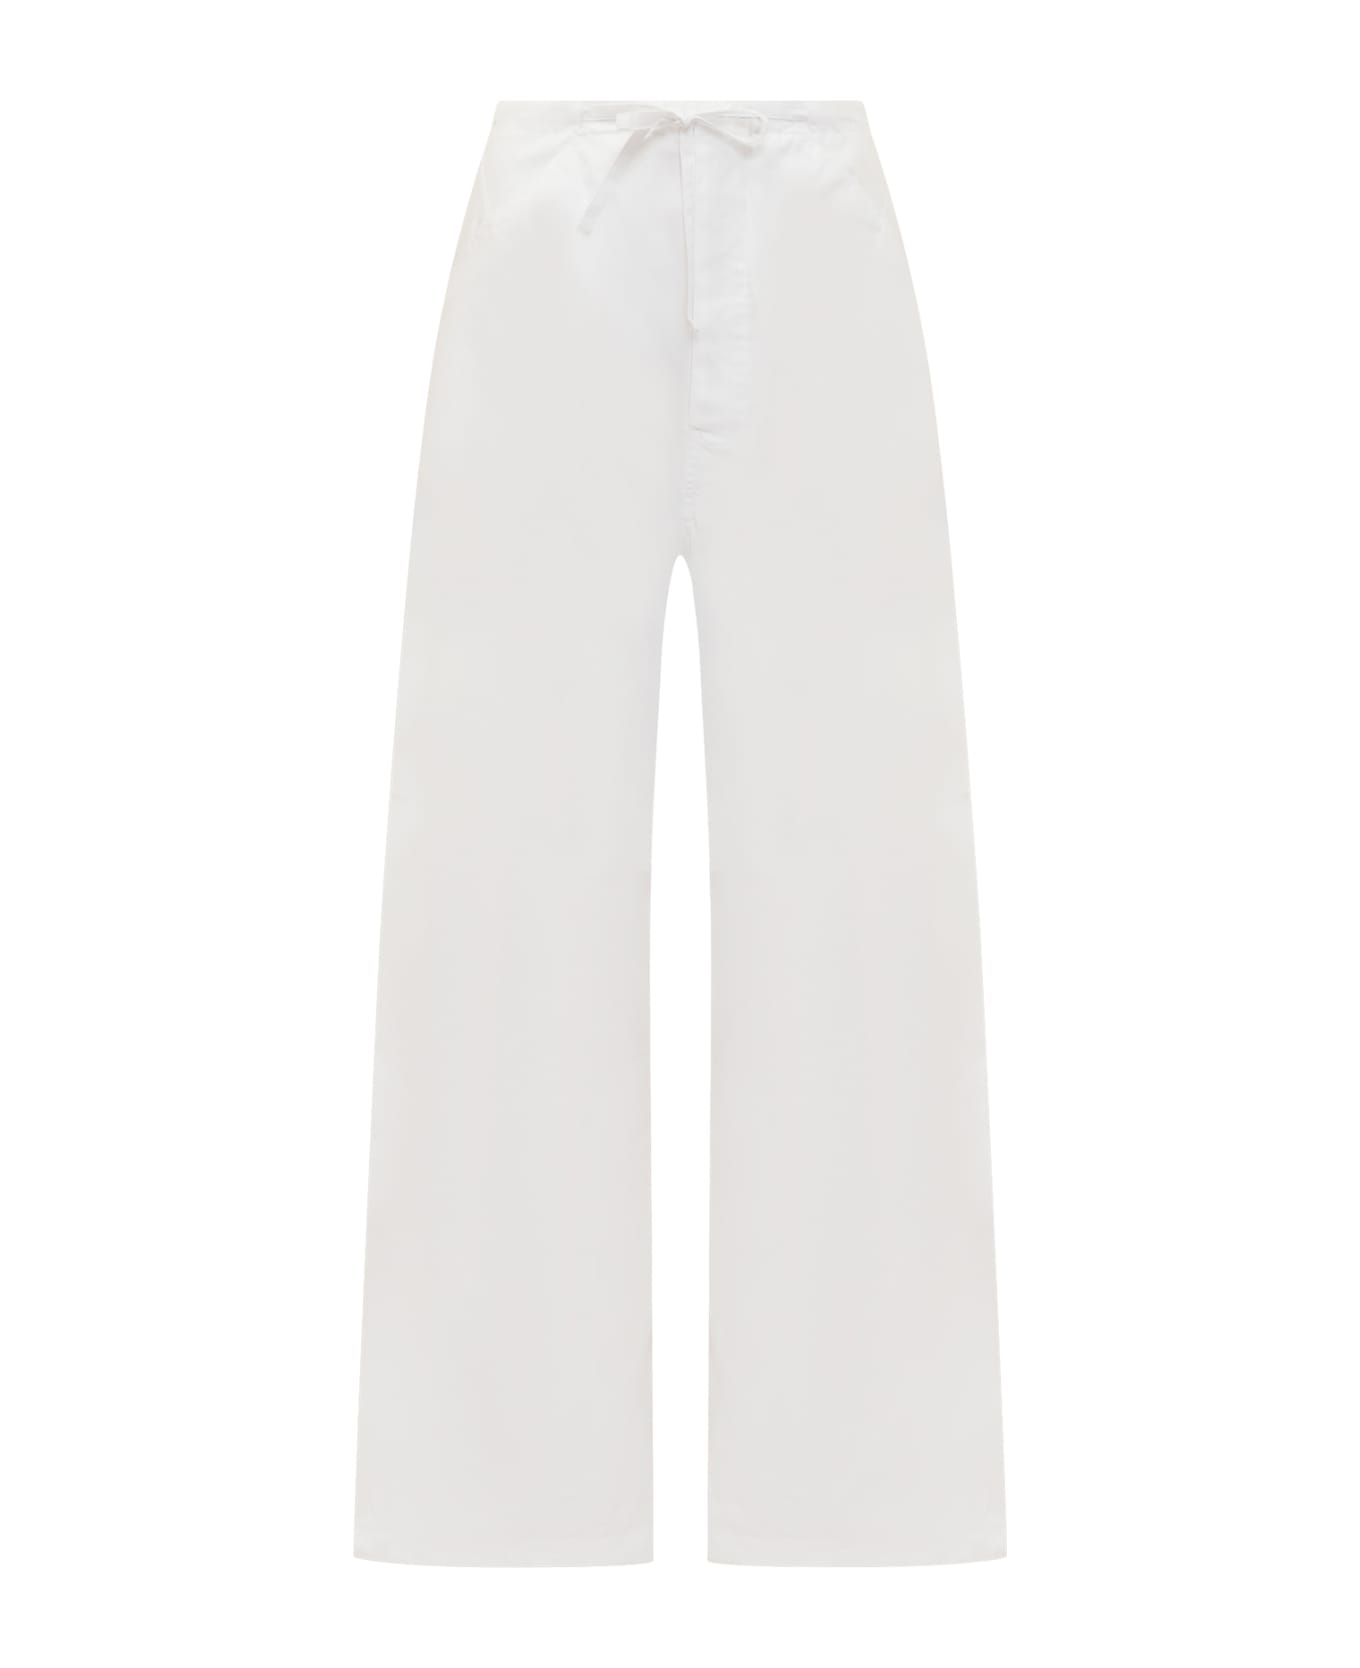 DARKPARK Daisy Milit Trousers - WHITE